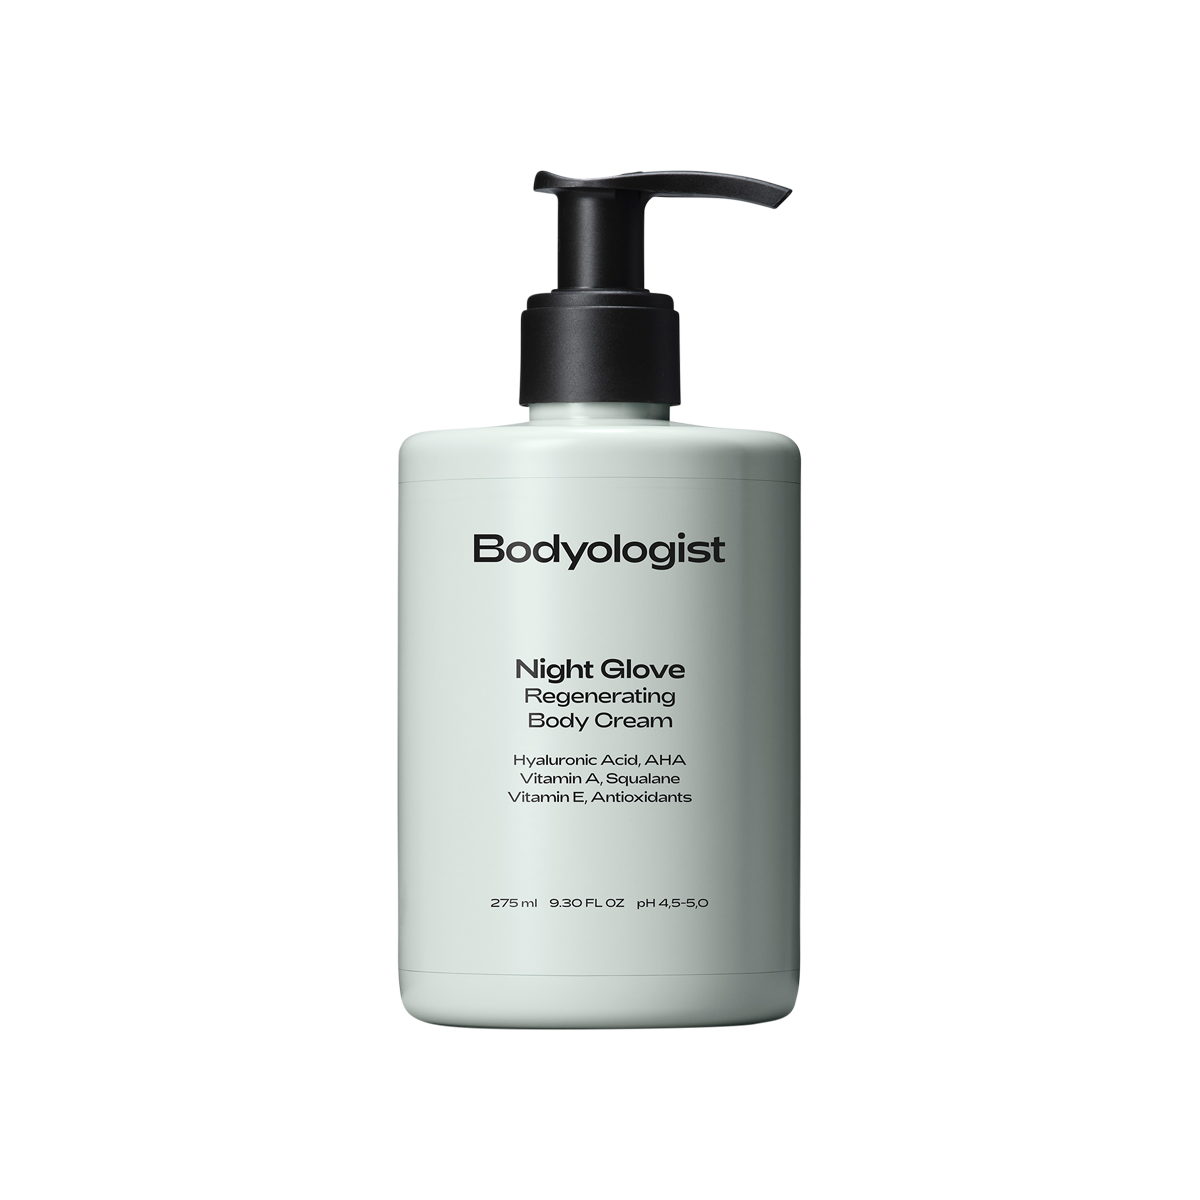 Bodyologist - Night Glove Regenerating Body Cream